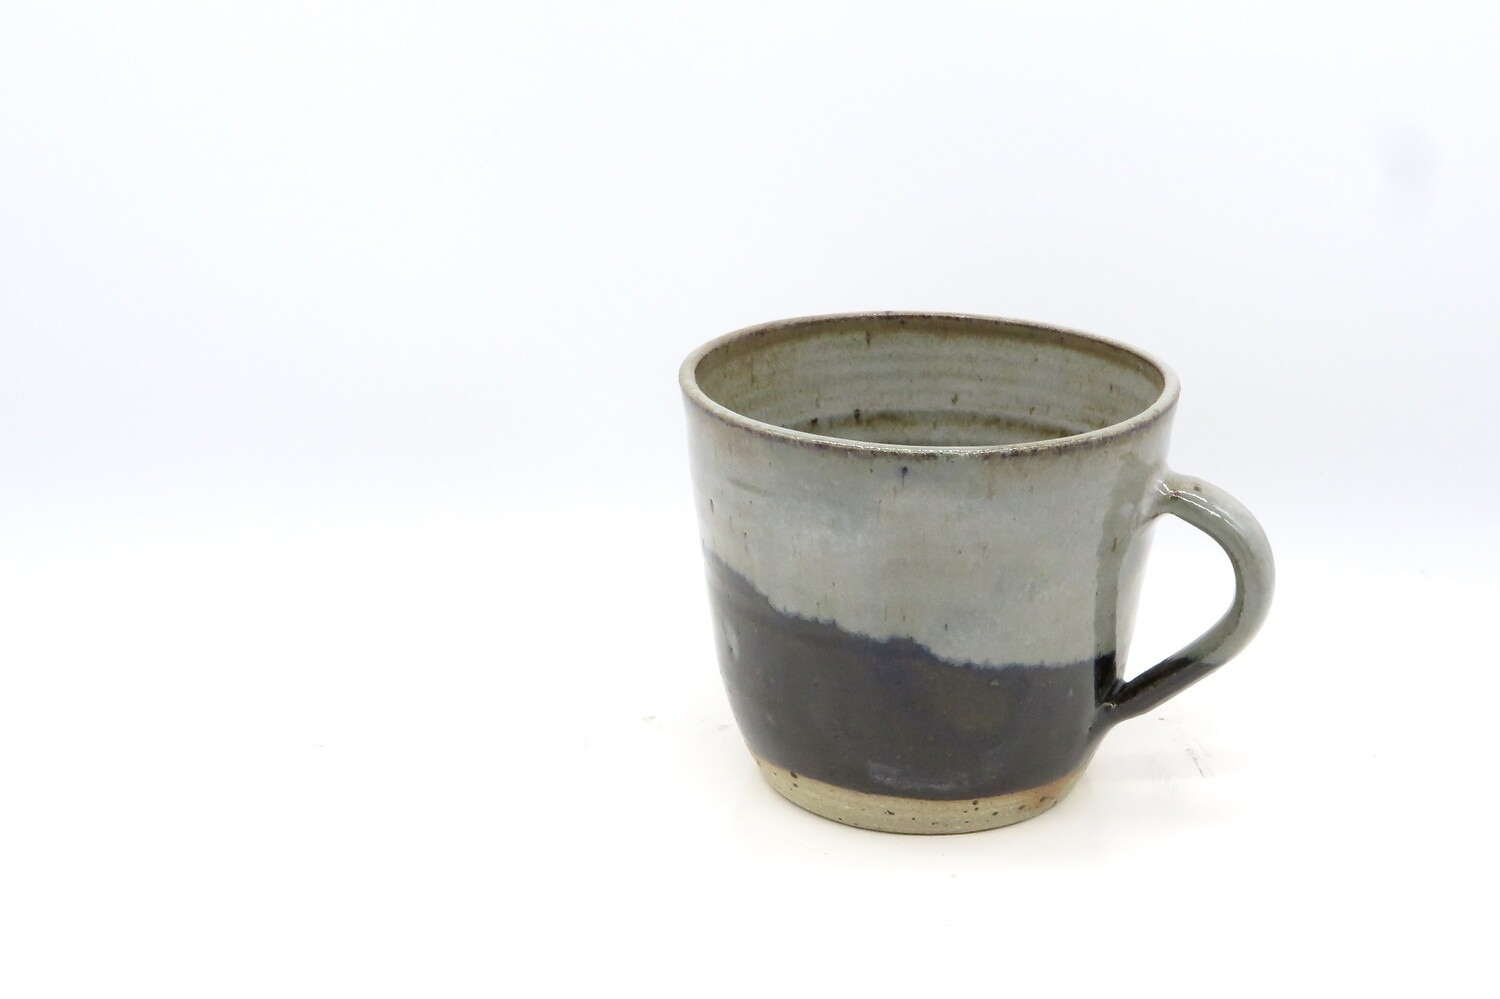 Mug - Black and mottled grey.